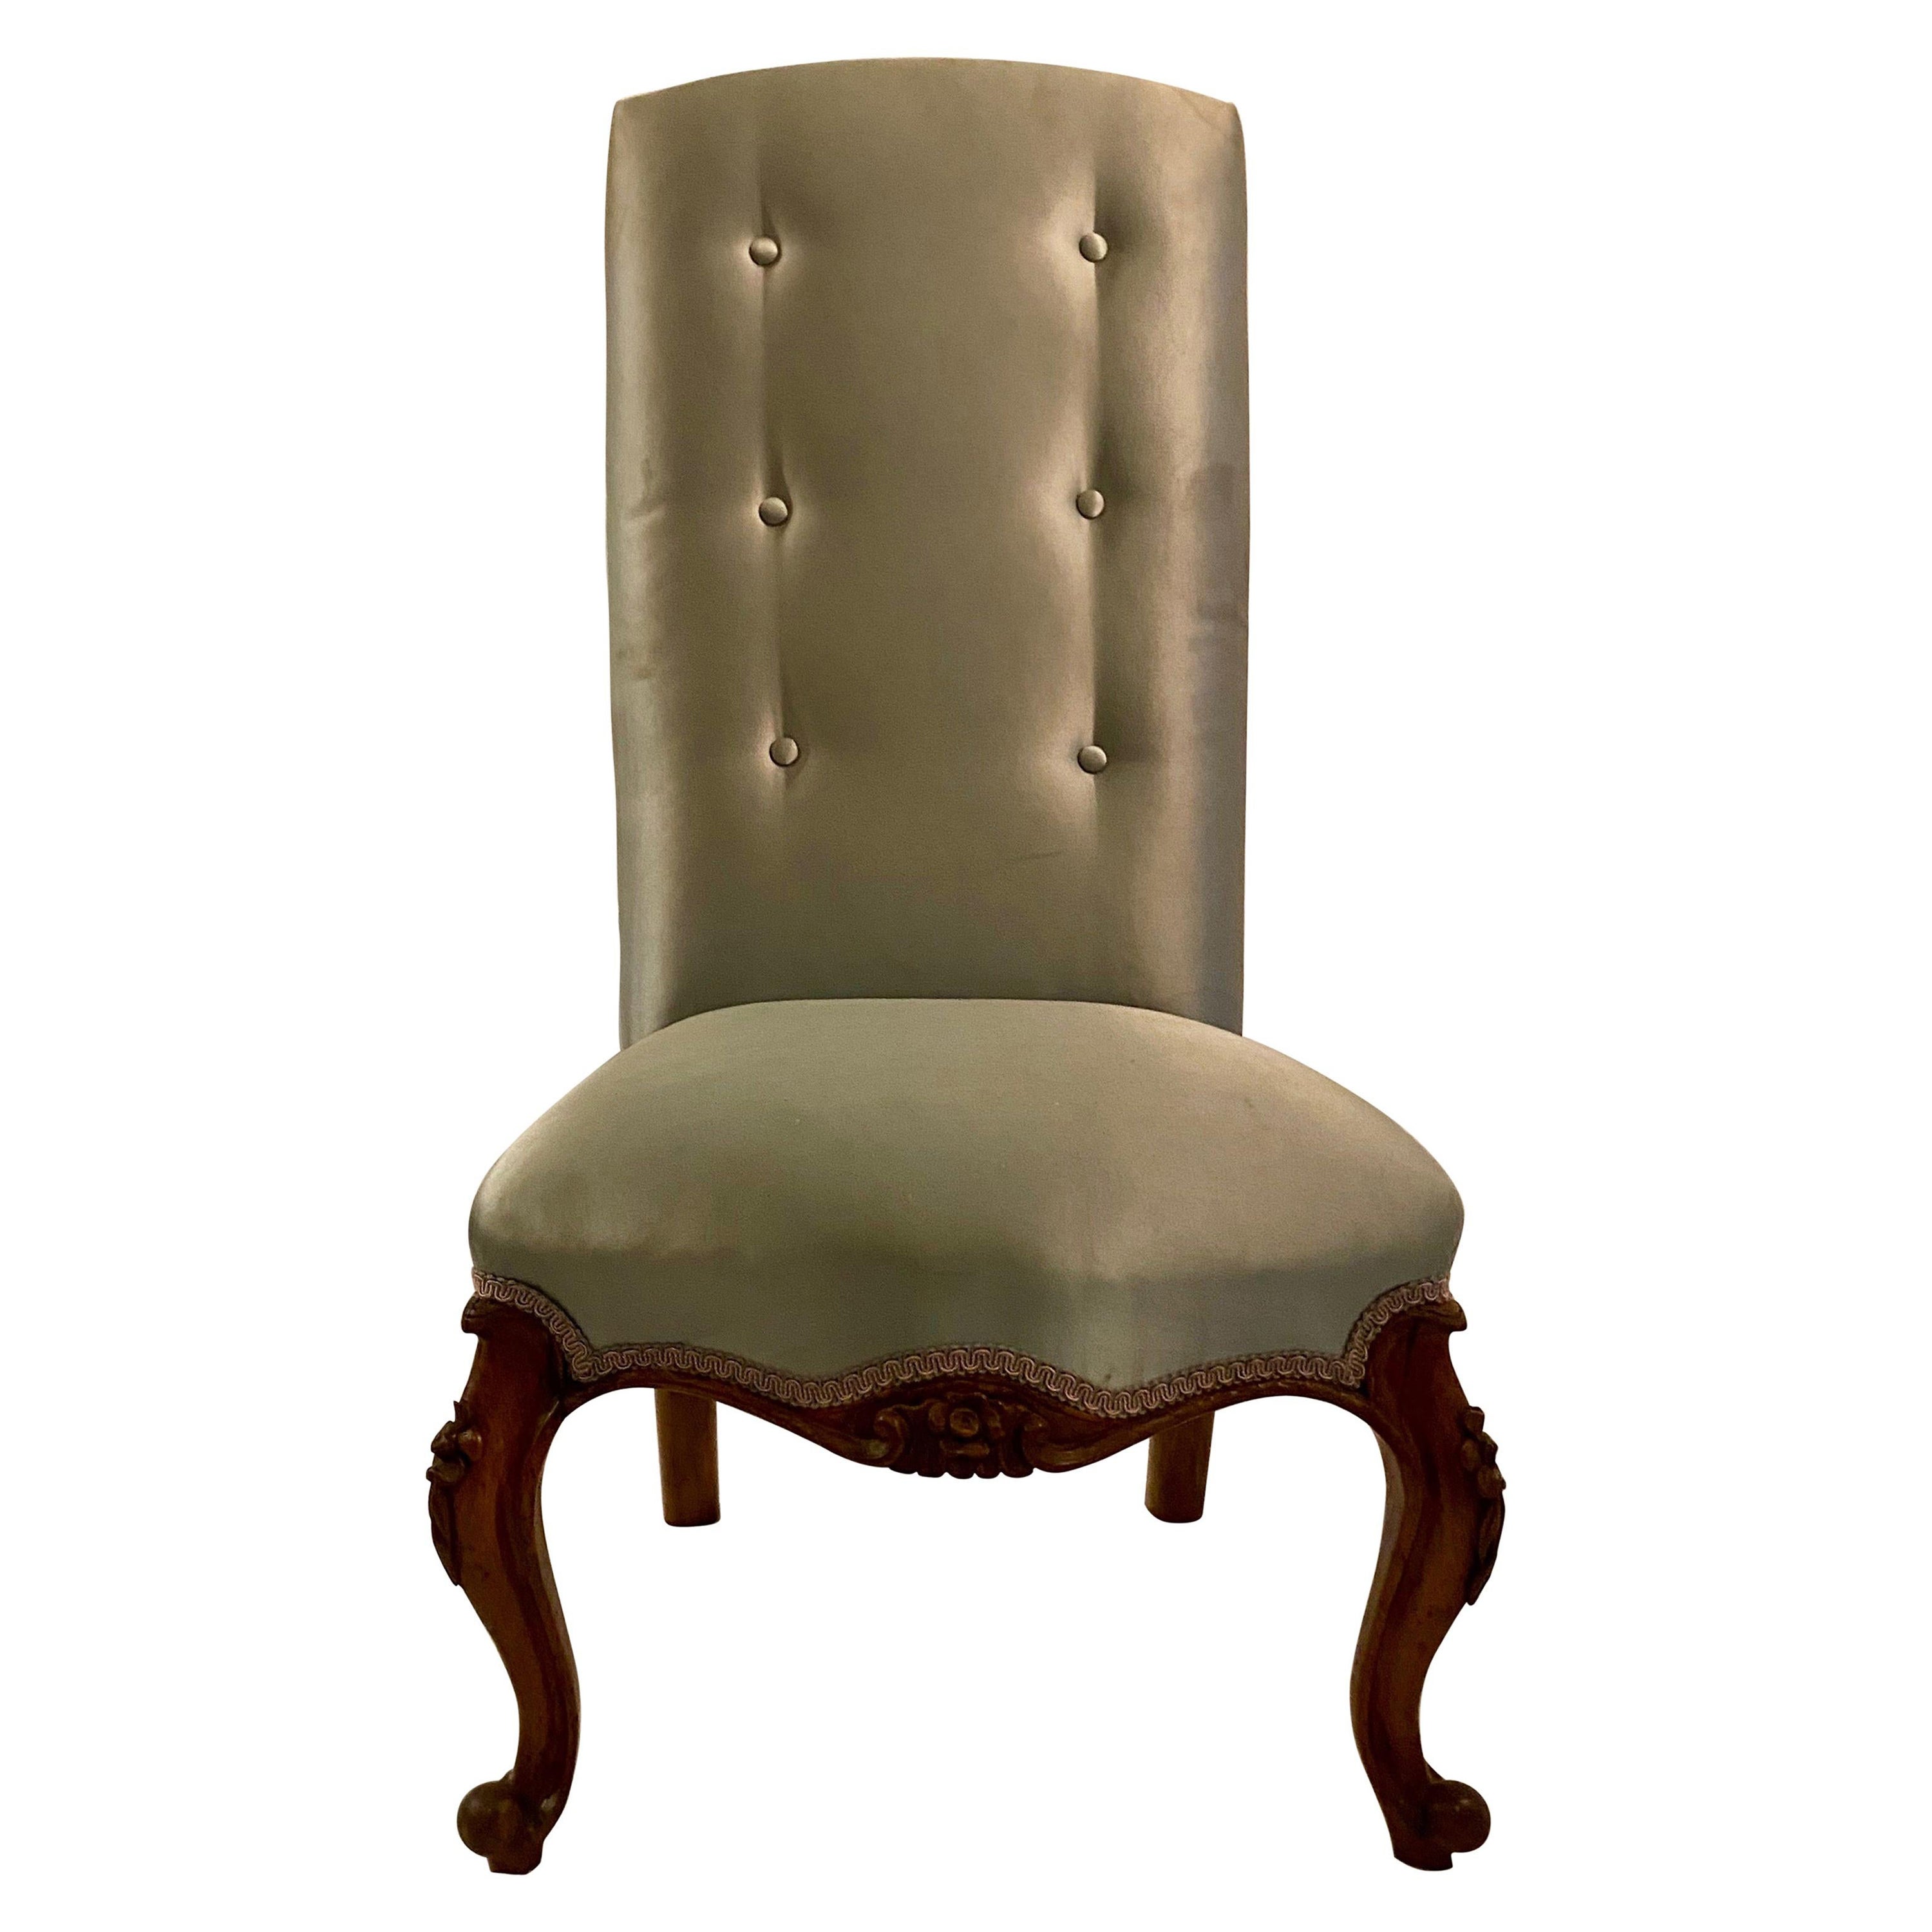 Rare Old Louisiana Antebellum Walnut Slipper Chair For Sale